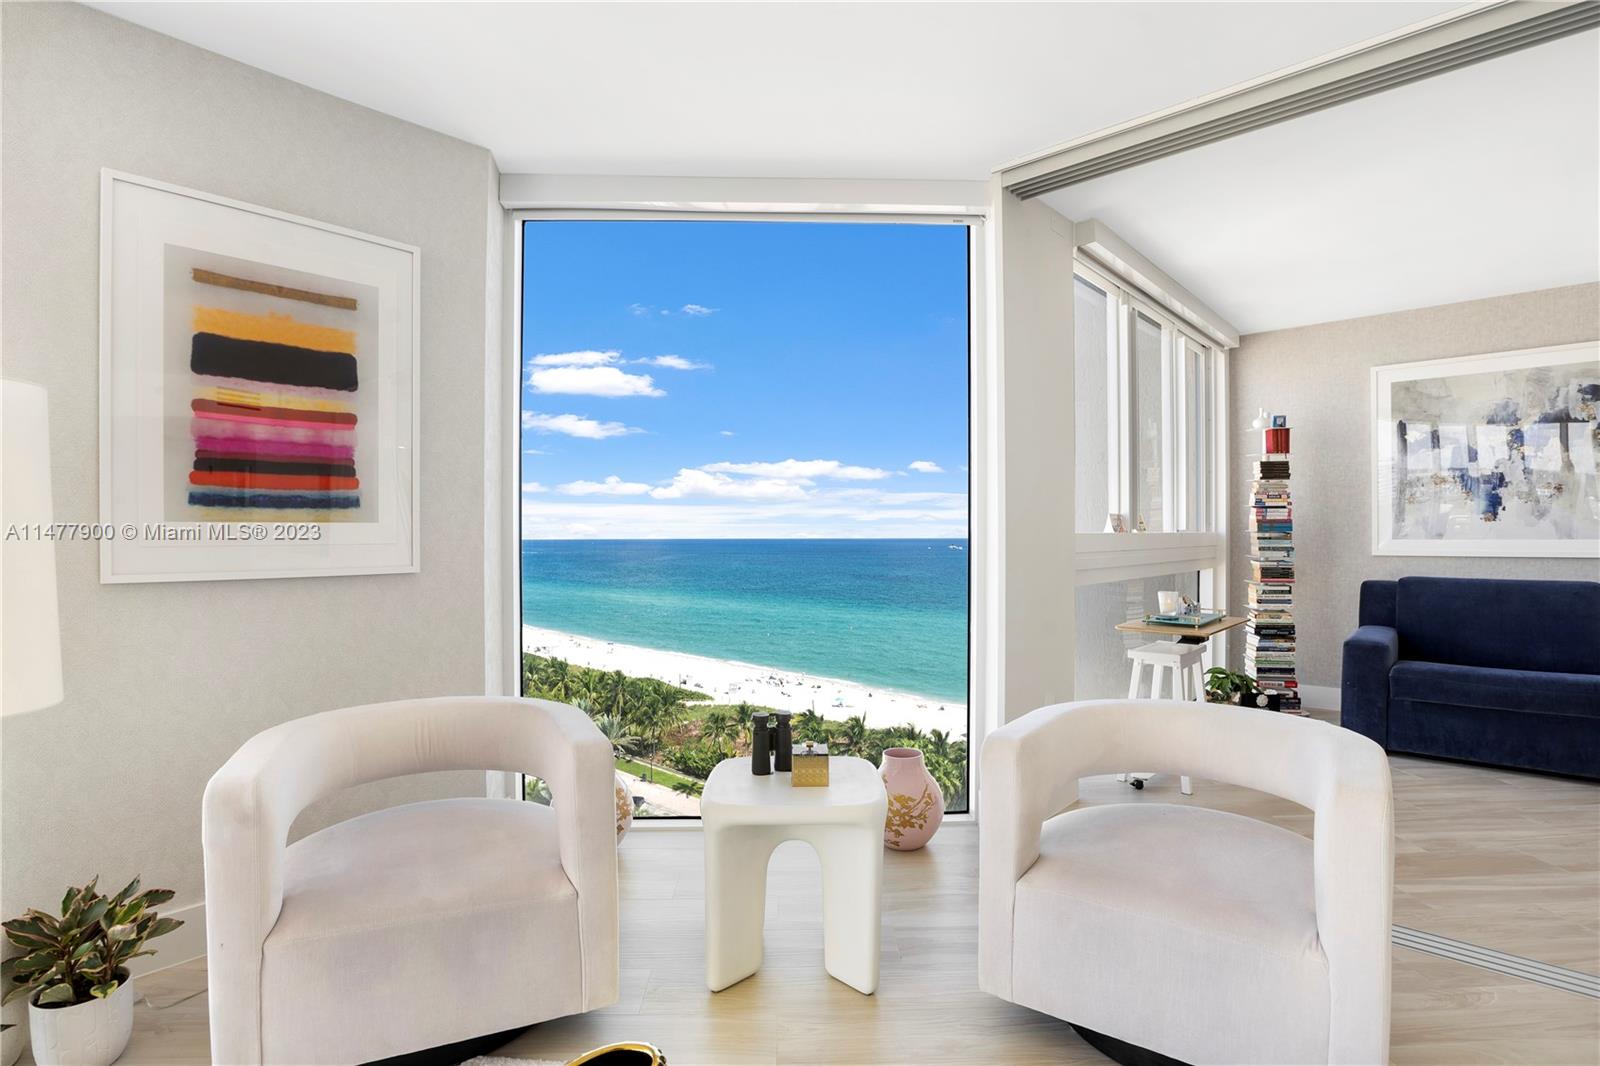 Property for Sale at 7330 Ocean Ter 15-D, Miami Beach, Miami-Dade County, Florida - Bedrooms: 2 
Bathrooms: 2  - $1,500,000